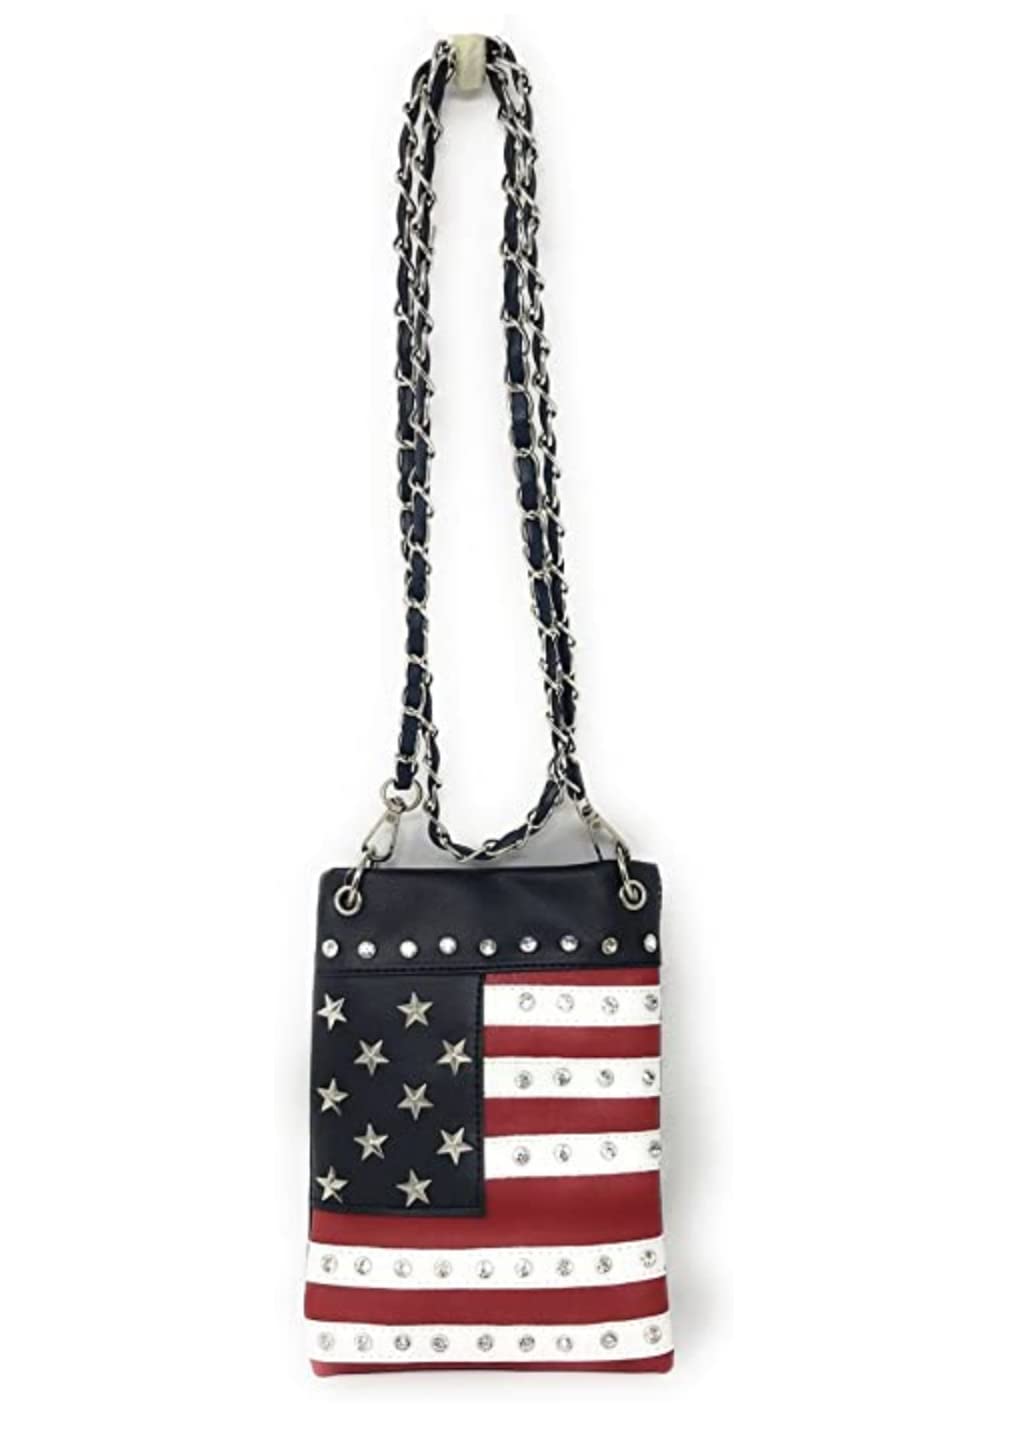 Premium American National Flag Rhinestone Concealed Carry Handbag, Messenger bag, Wallet in Multi Colors